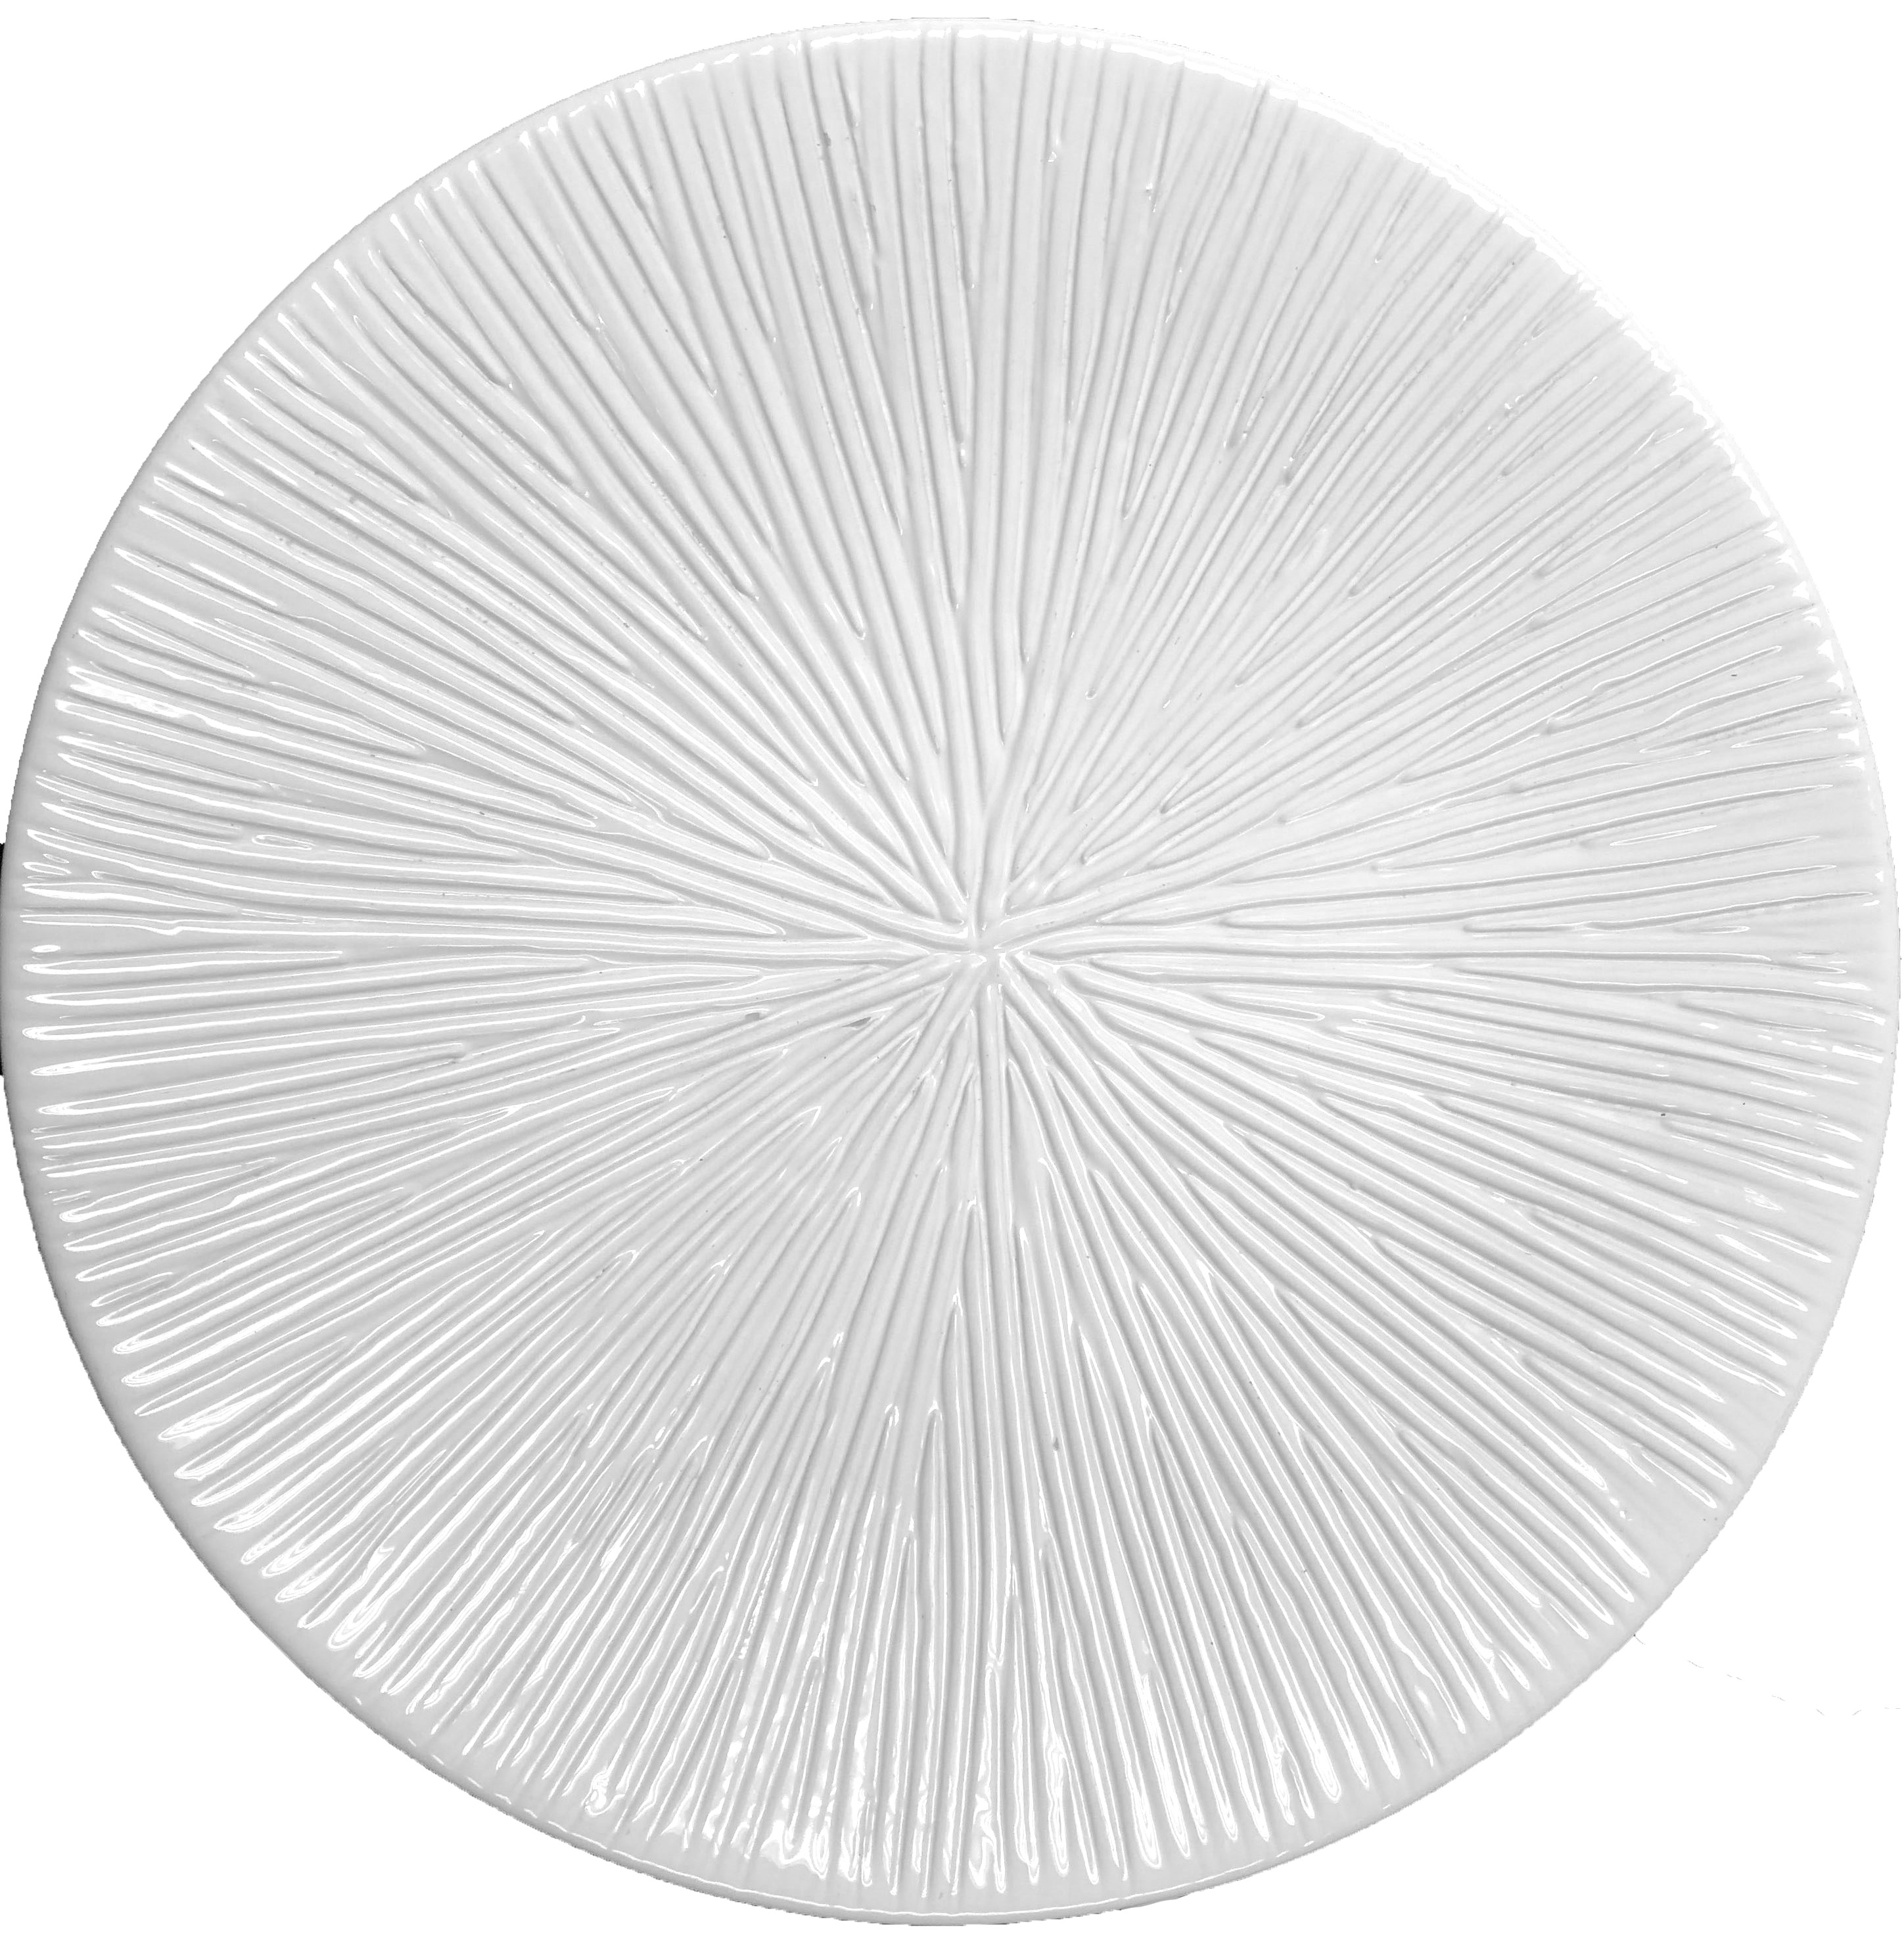 category_D2014 - Round Ridged Platter 16